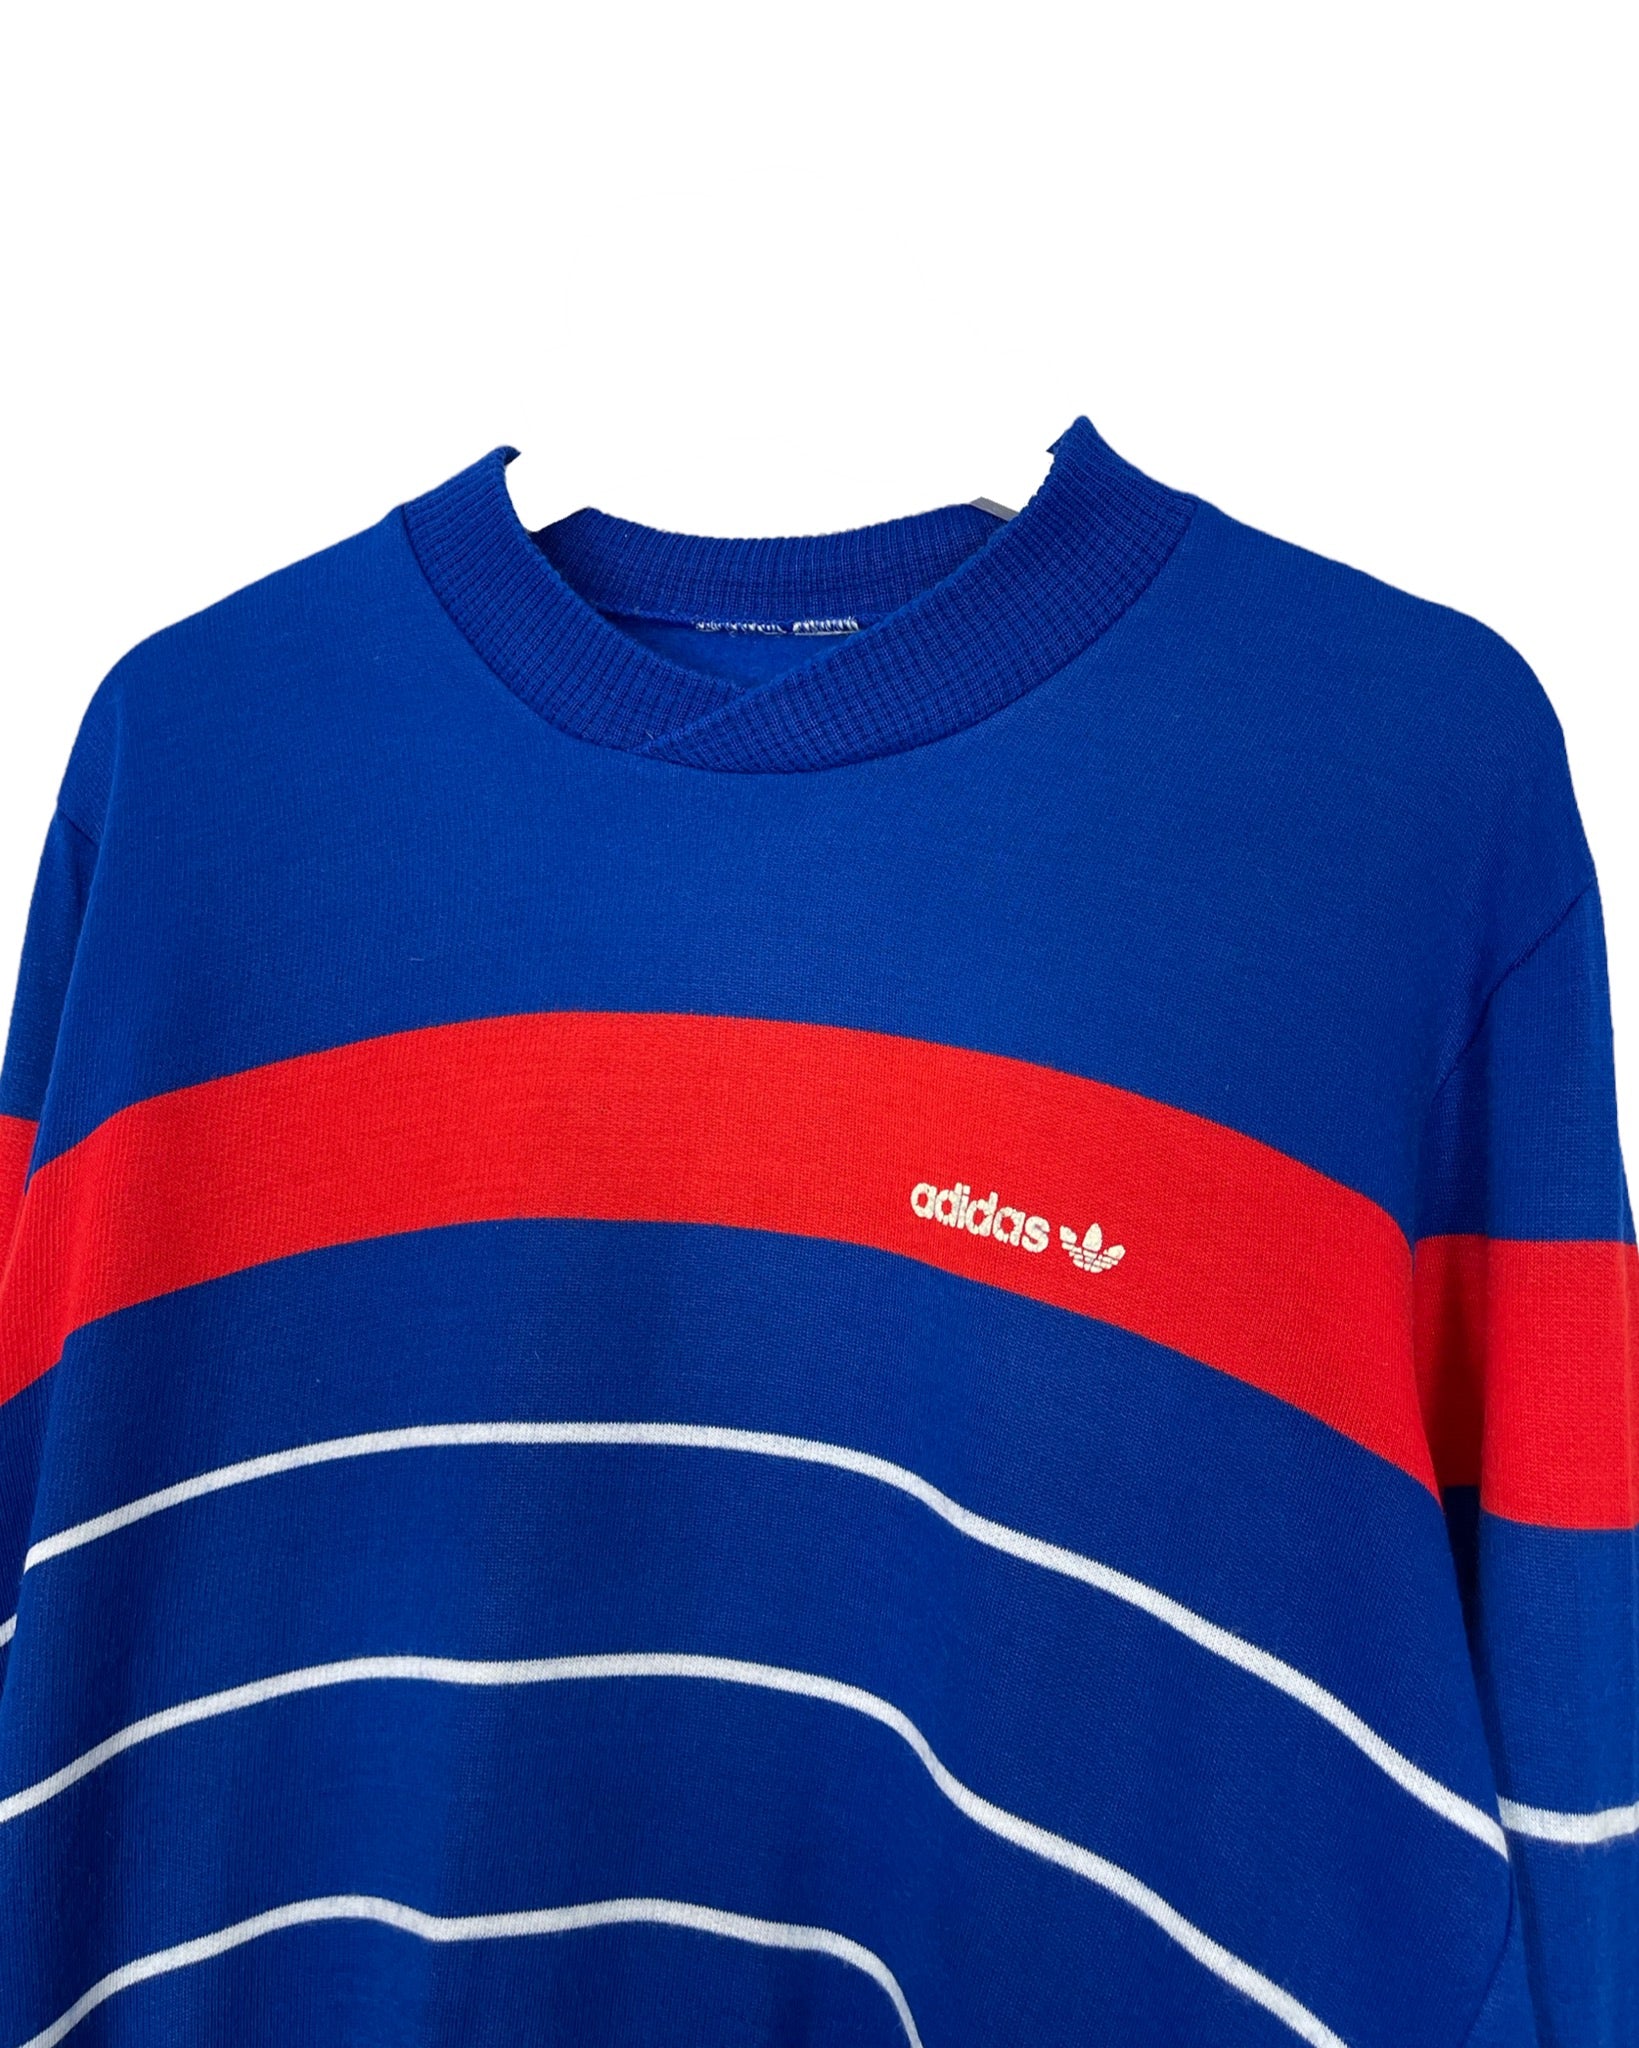  Sweatshirt Adidas Sweat vintage made in France - S - PLOMOSTORE